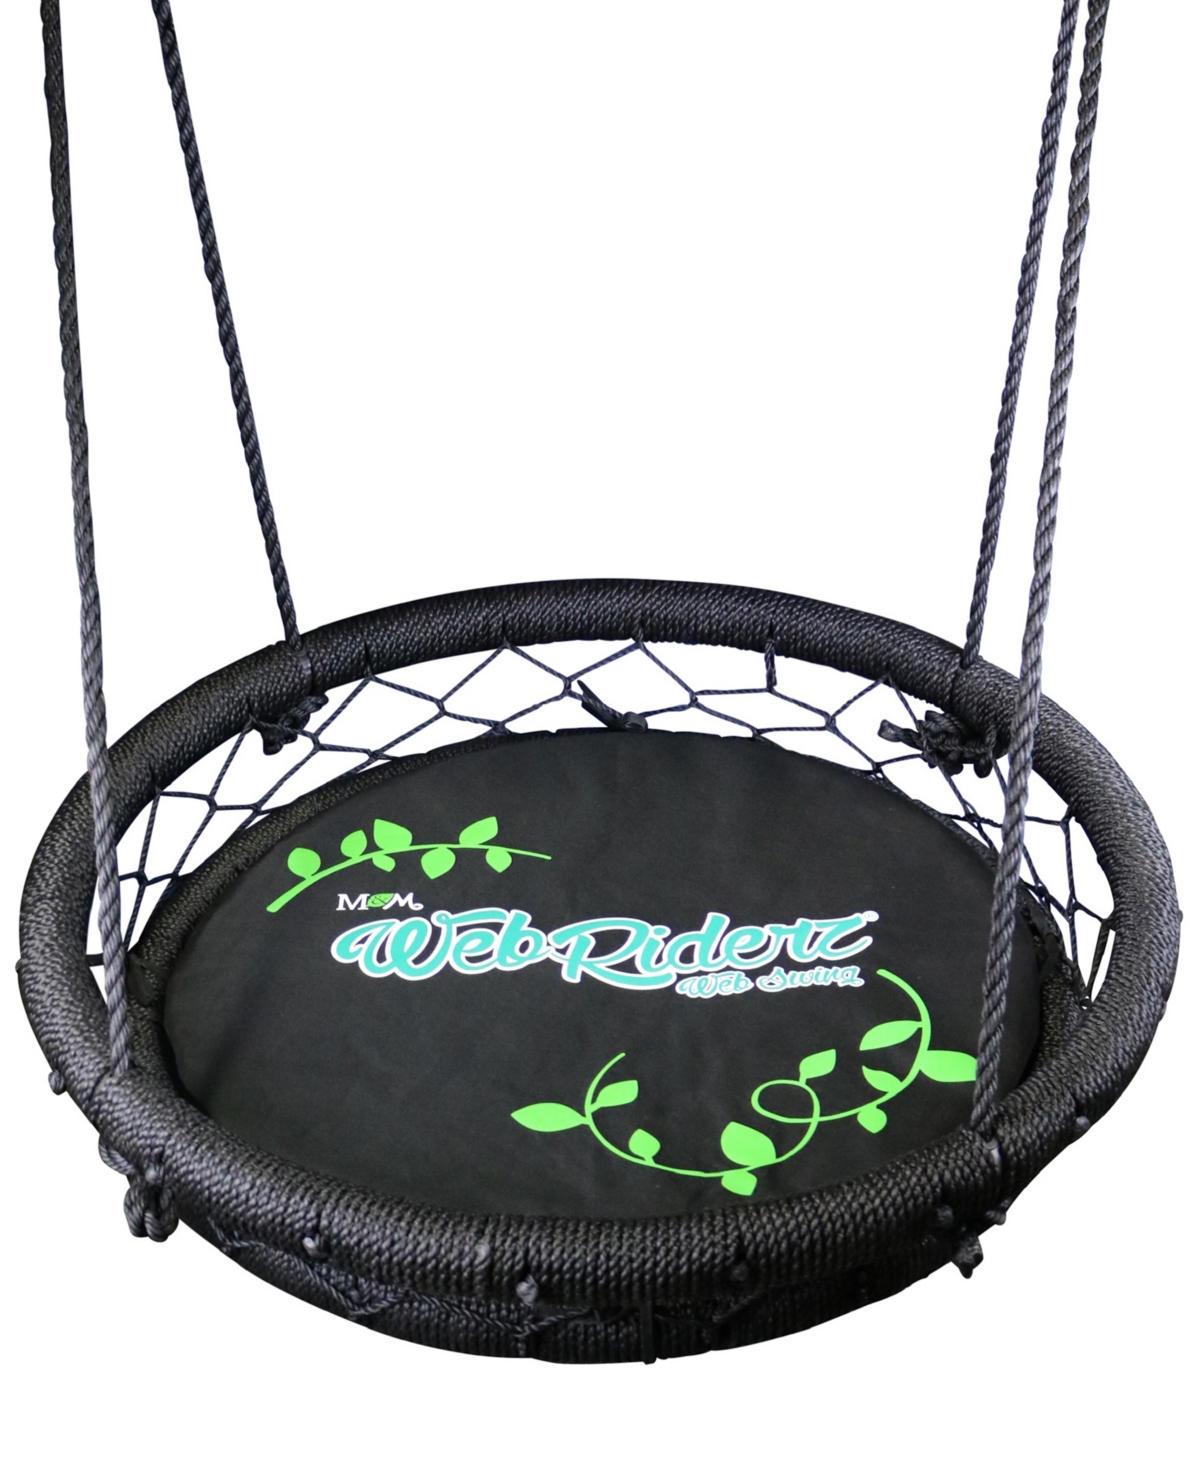 M&m Sales Enterprises Kids' Web Riders Basket Web Swing In No Color